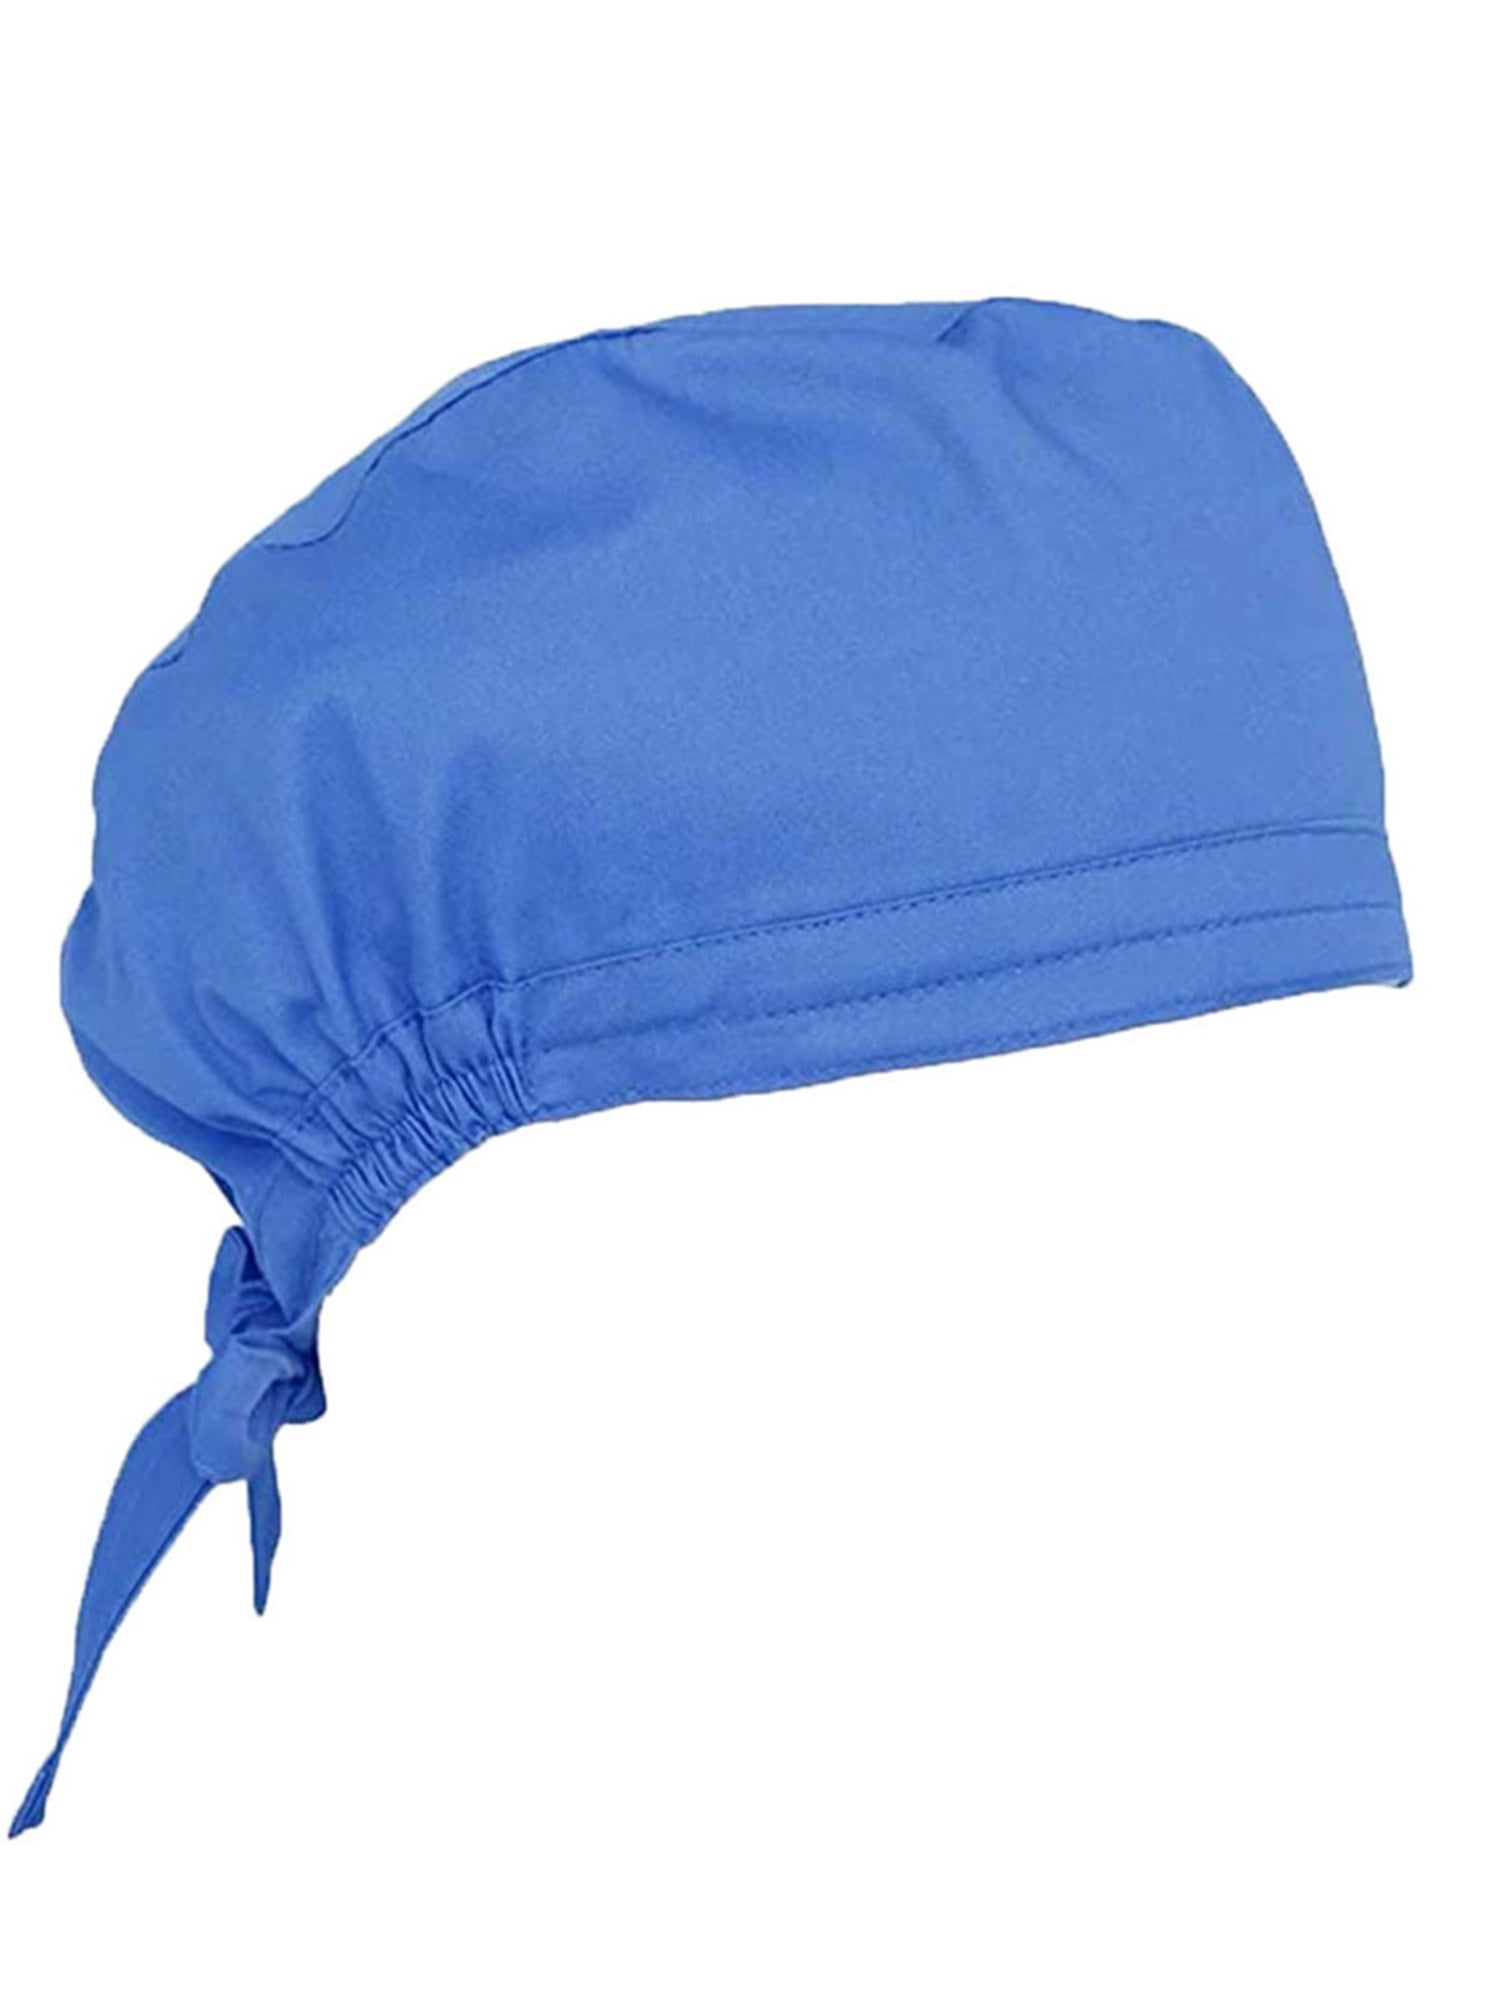 Surgical Scrub Cap Doctor Nurse Cotton Bouffant Adjustable Head Cover Wrap Hats 